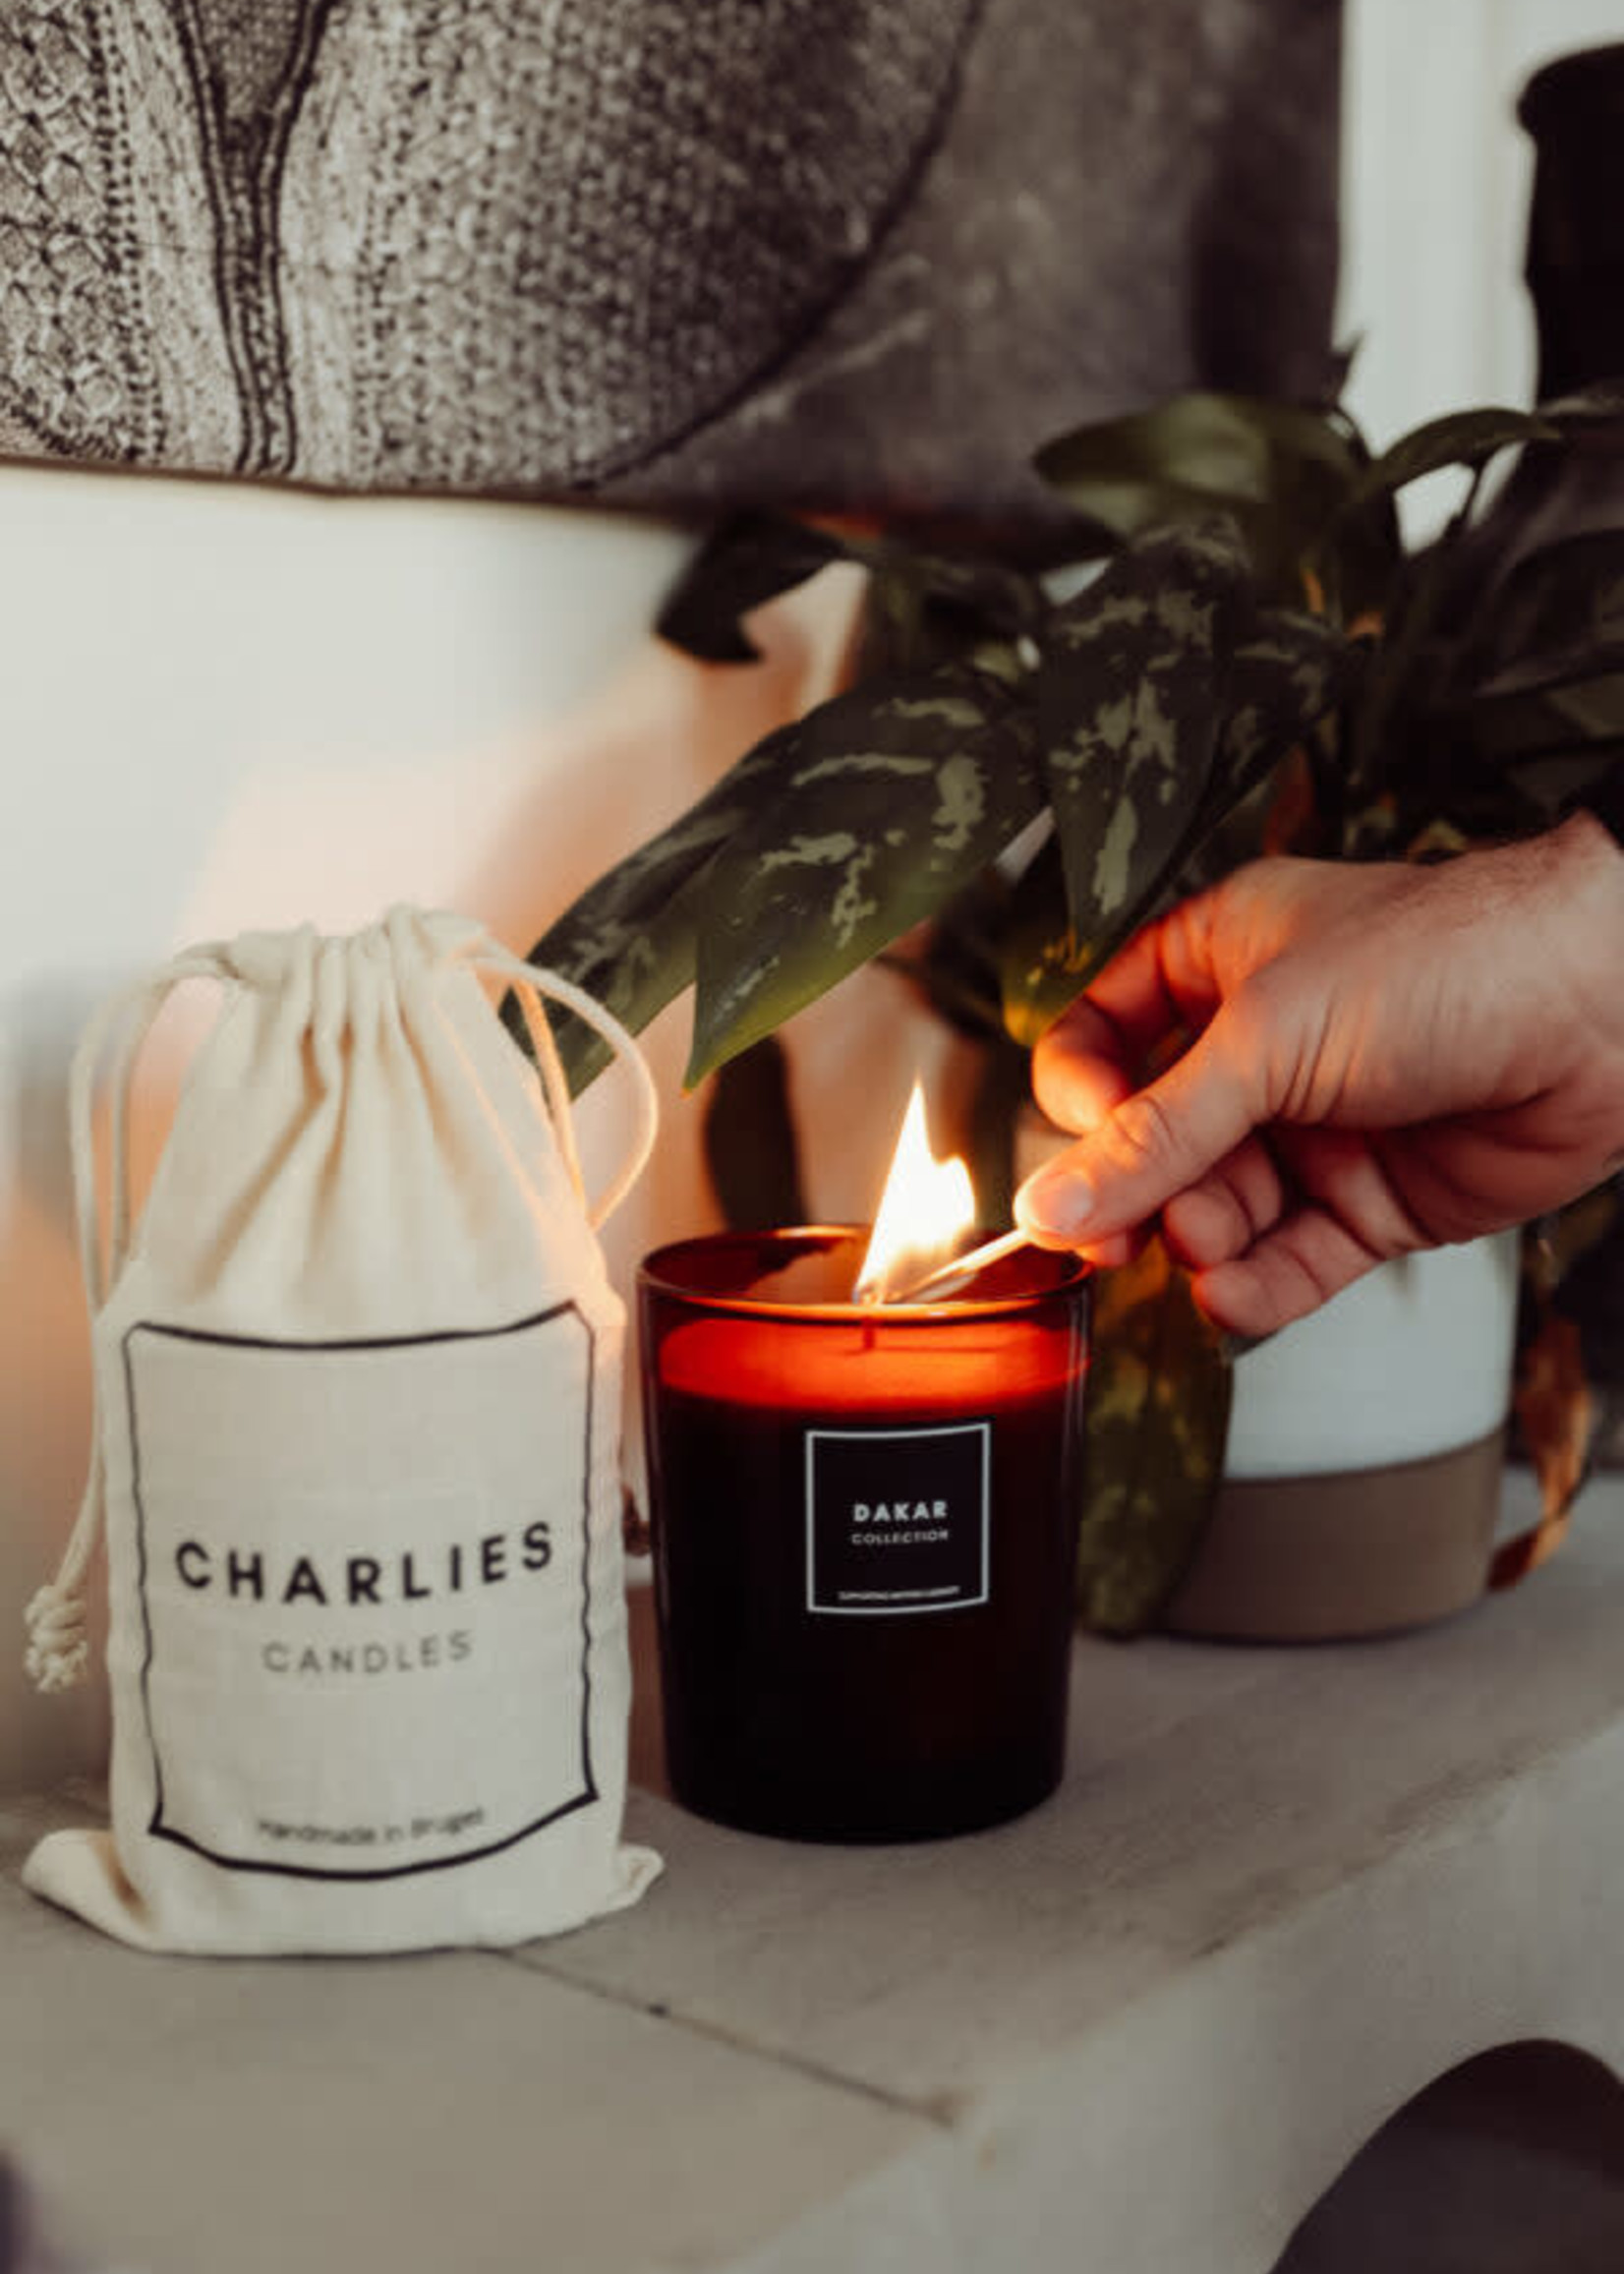 Charlies Candles Kaars Dakar Medium + bruin glas